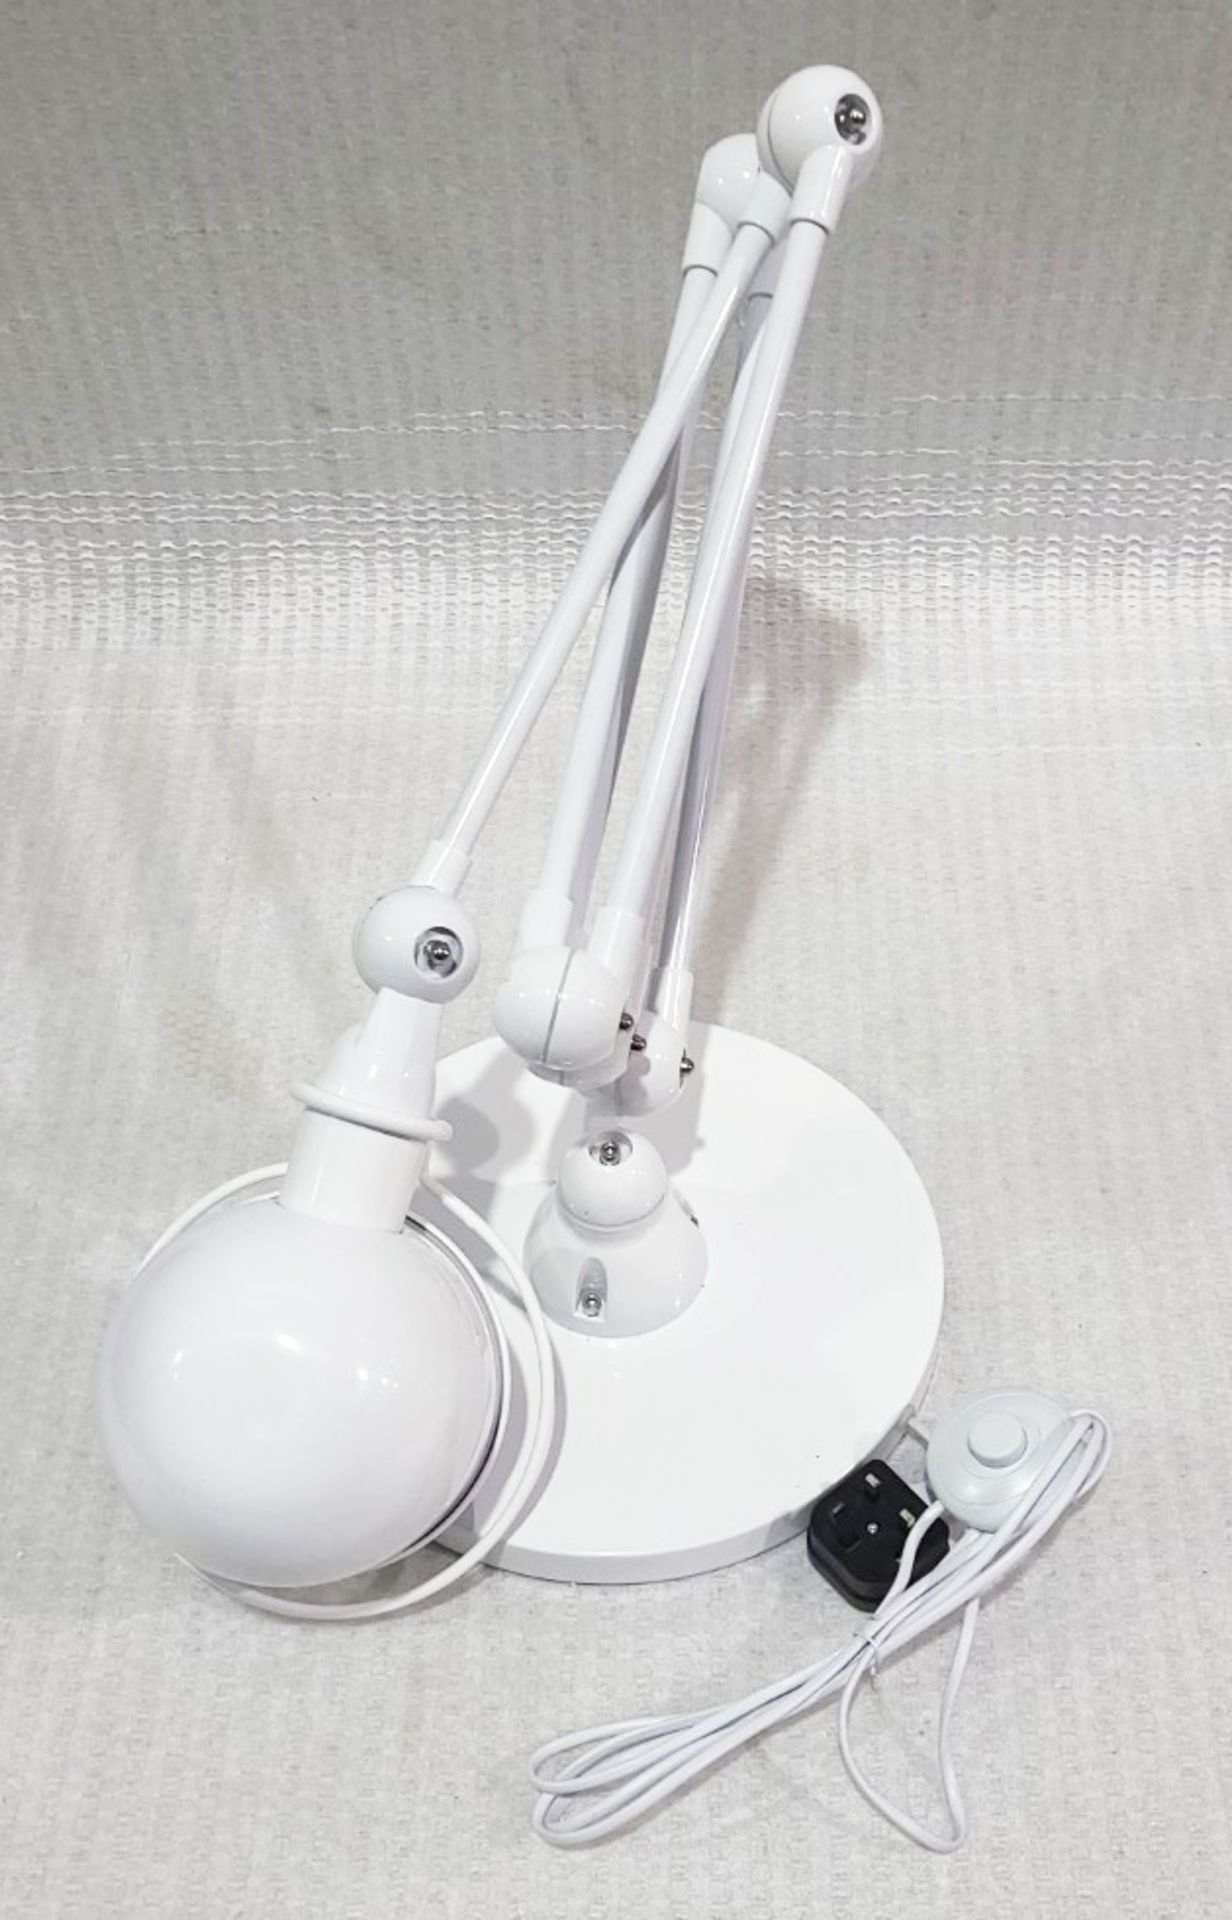 1 x BLUESUNTREE 'Jielde' Glossy White Steel Loft Floor Lamp With Six Adjustable Arms - Image 3 of 11